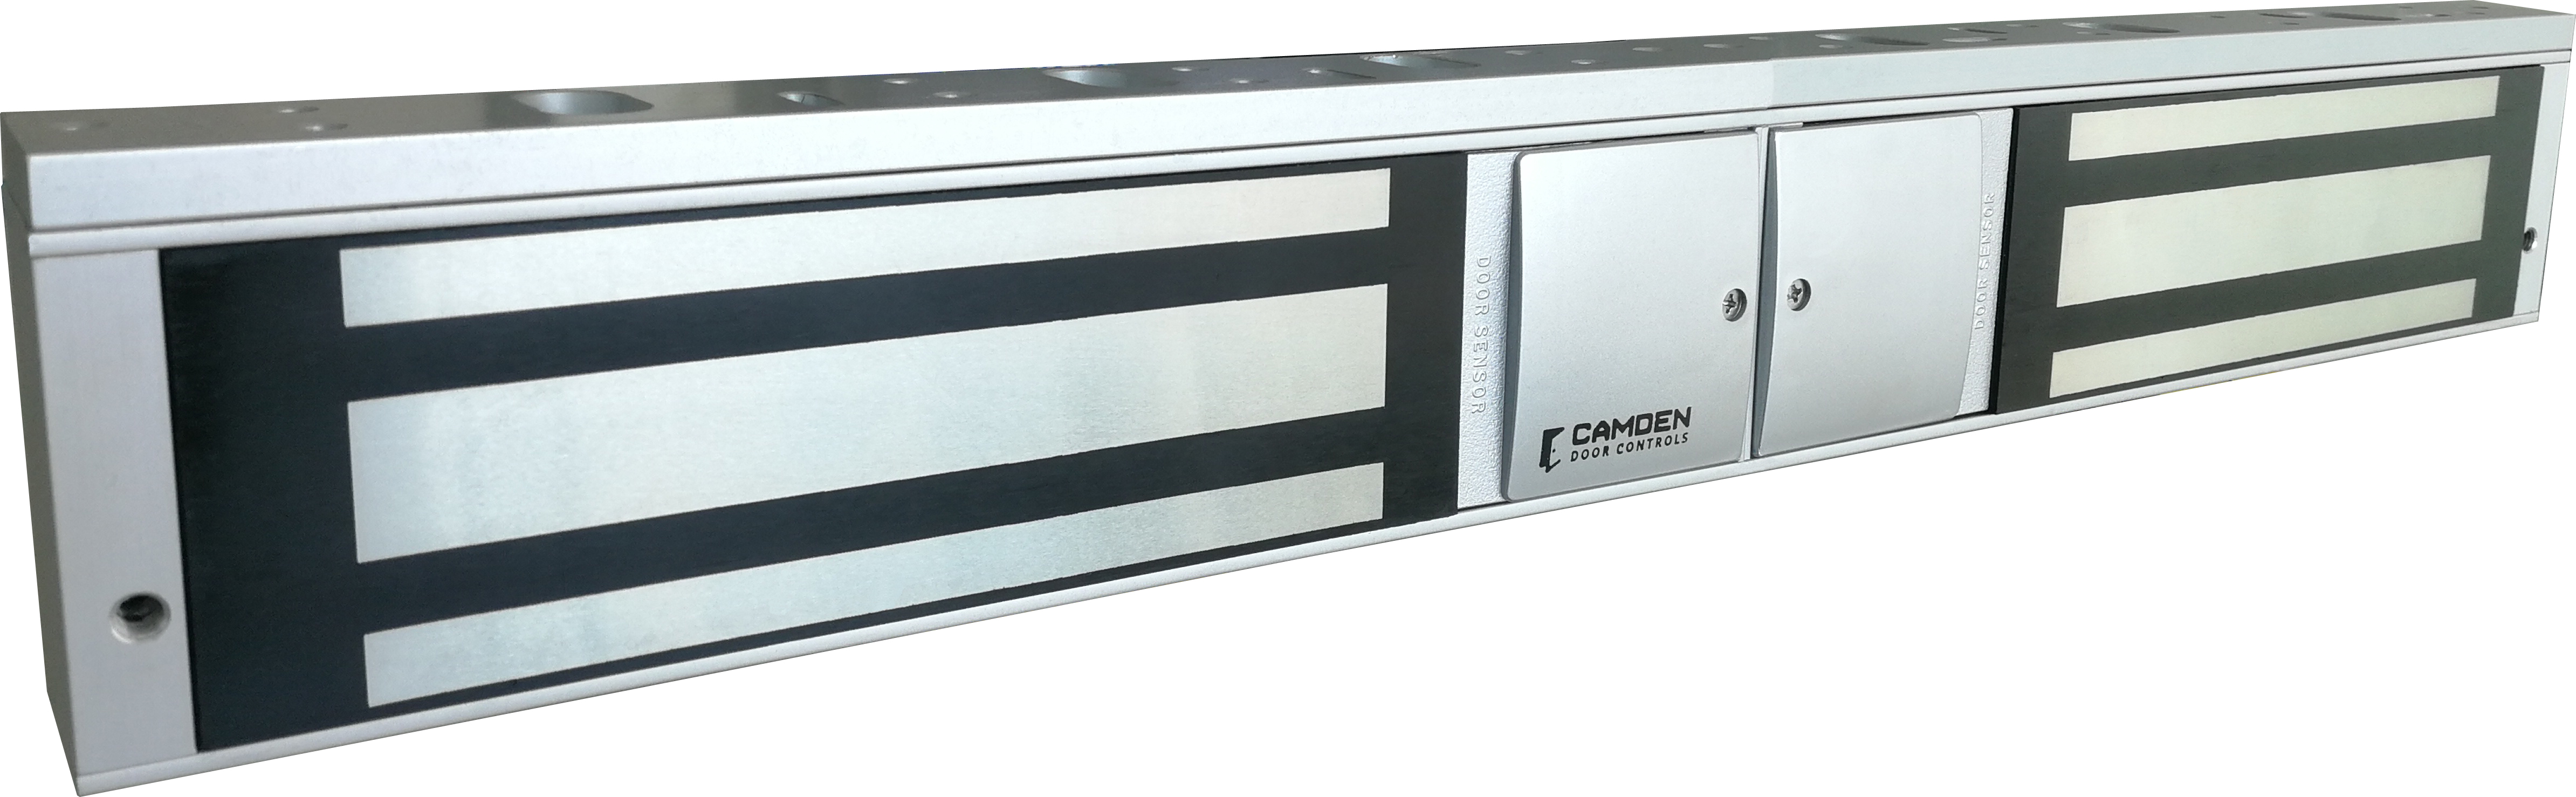 CM-45/455SE1: CX-WC Series:Barrier Free Restroom Control - Restroom Control